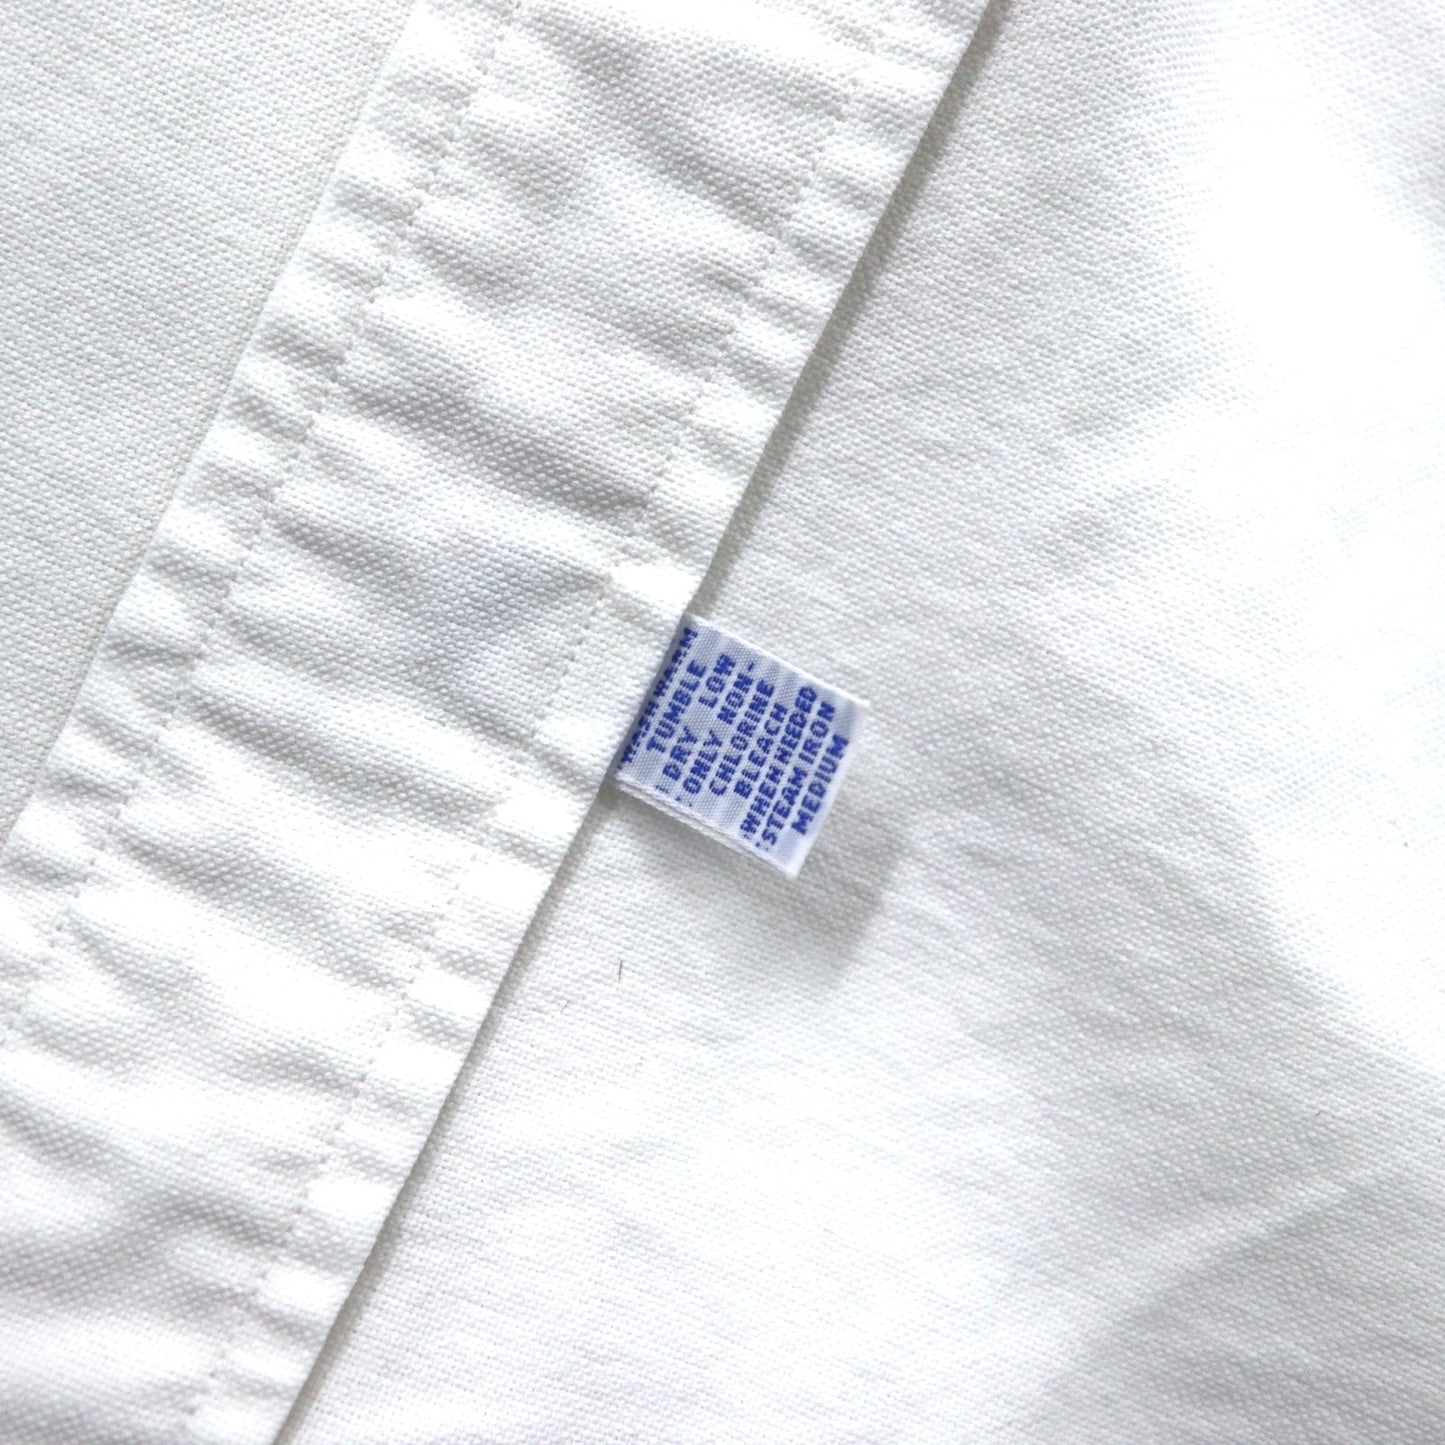 Ralph Lauren オックスフォード ボタンダウンシャツ 17.5-35 ホワイト コットン スモールポニー刺繍 ビッグサイズ